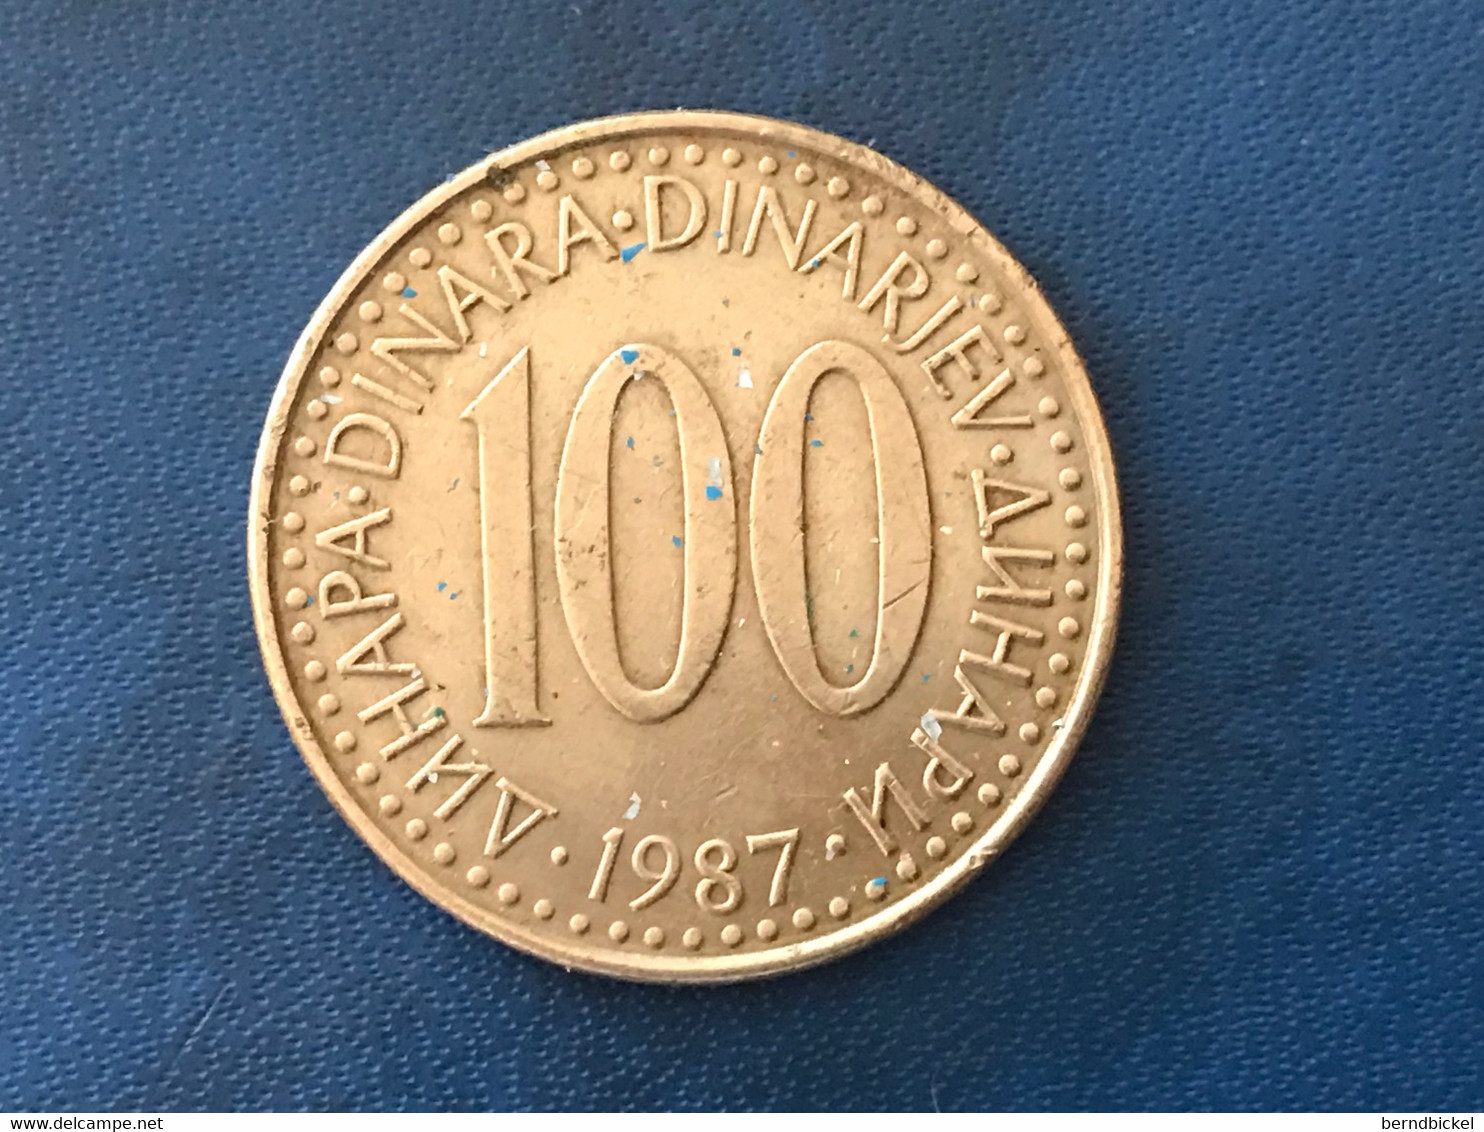 Münze Münzen Umlaufmünze Jugoslawien 100 Dinar 1987 - Jugoslawien